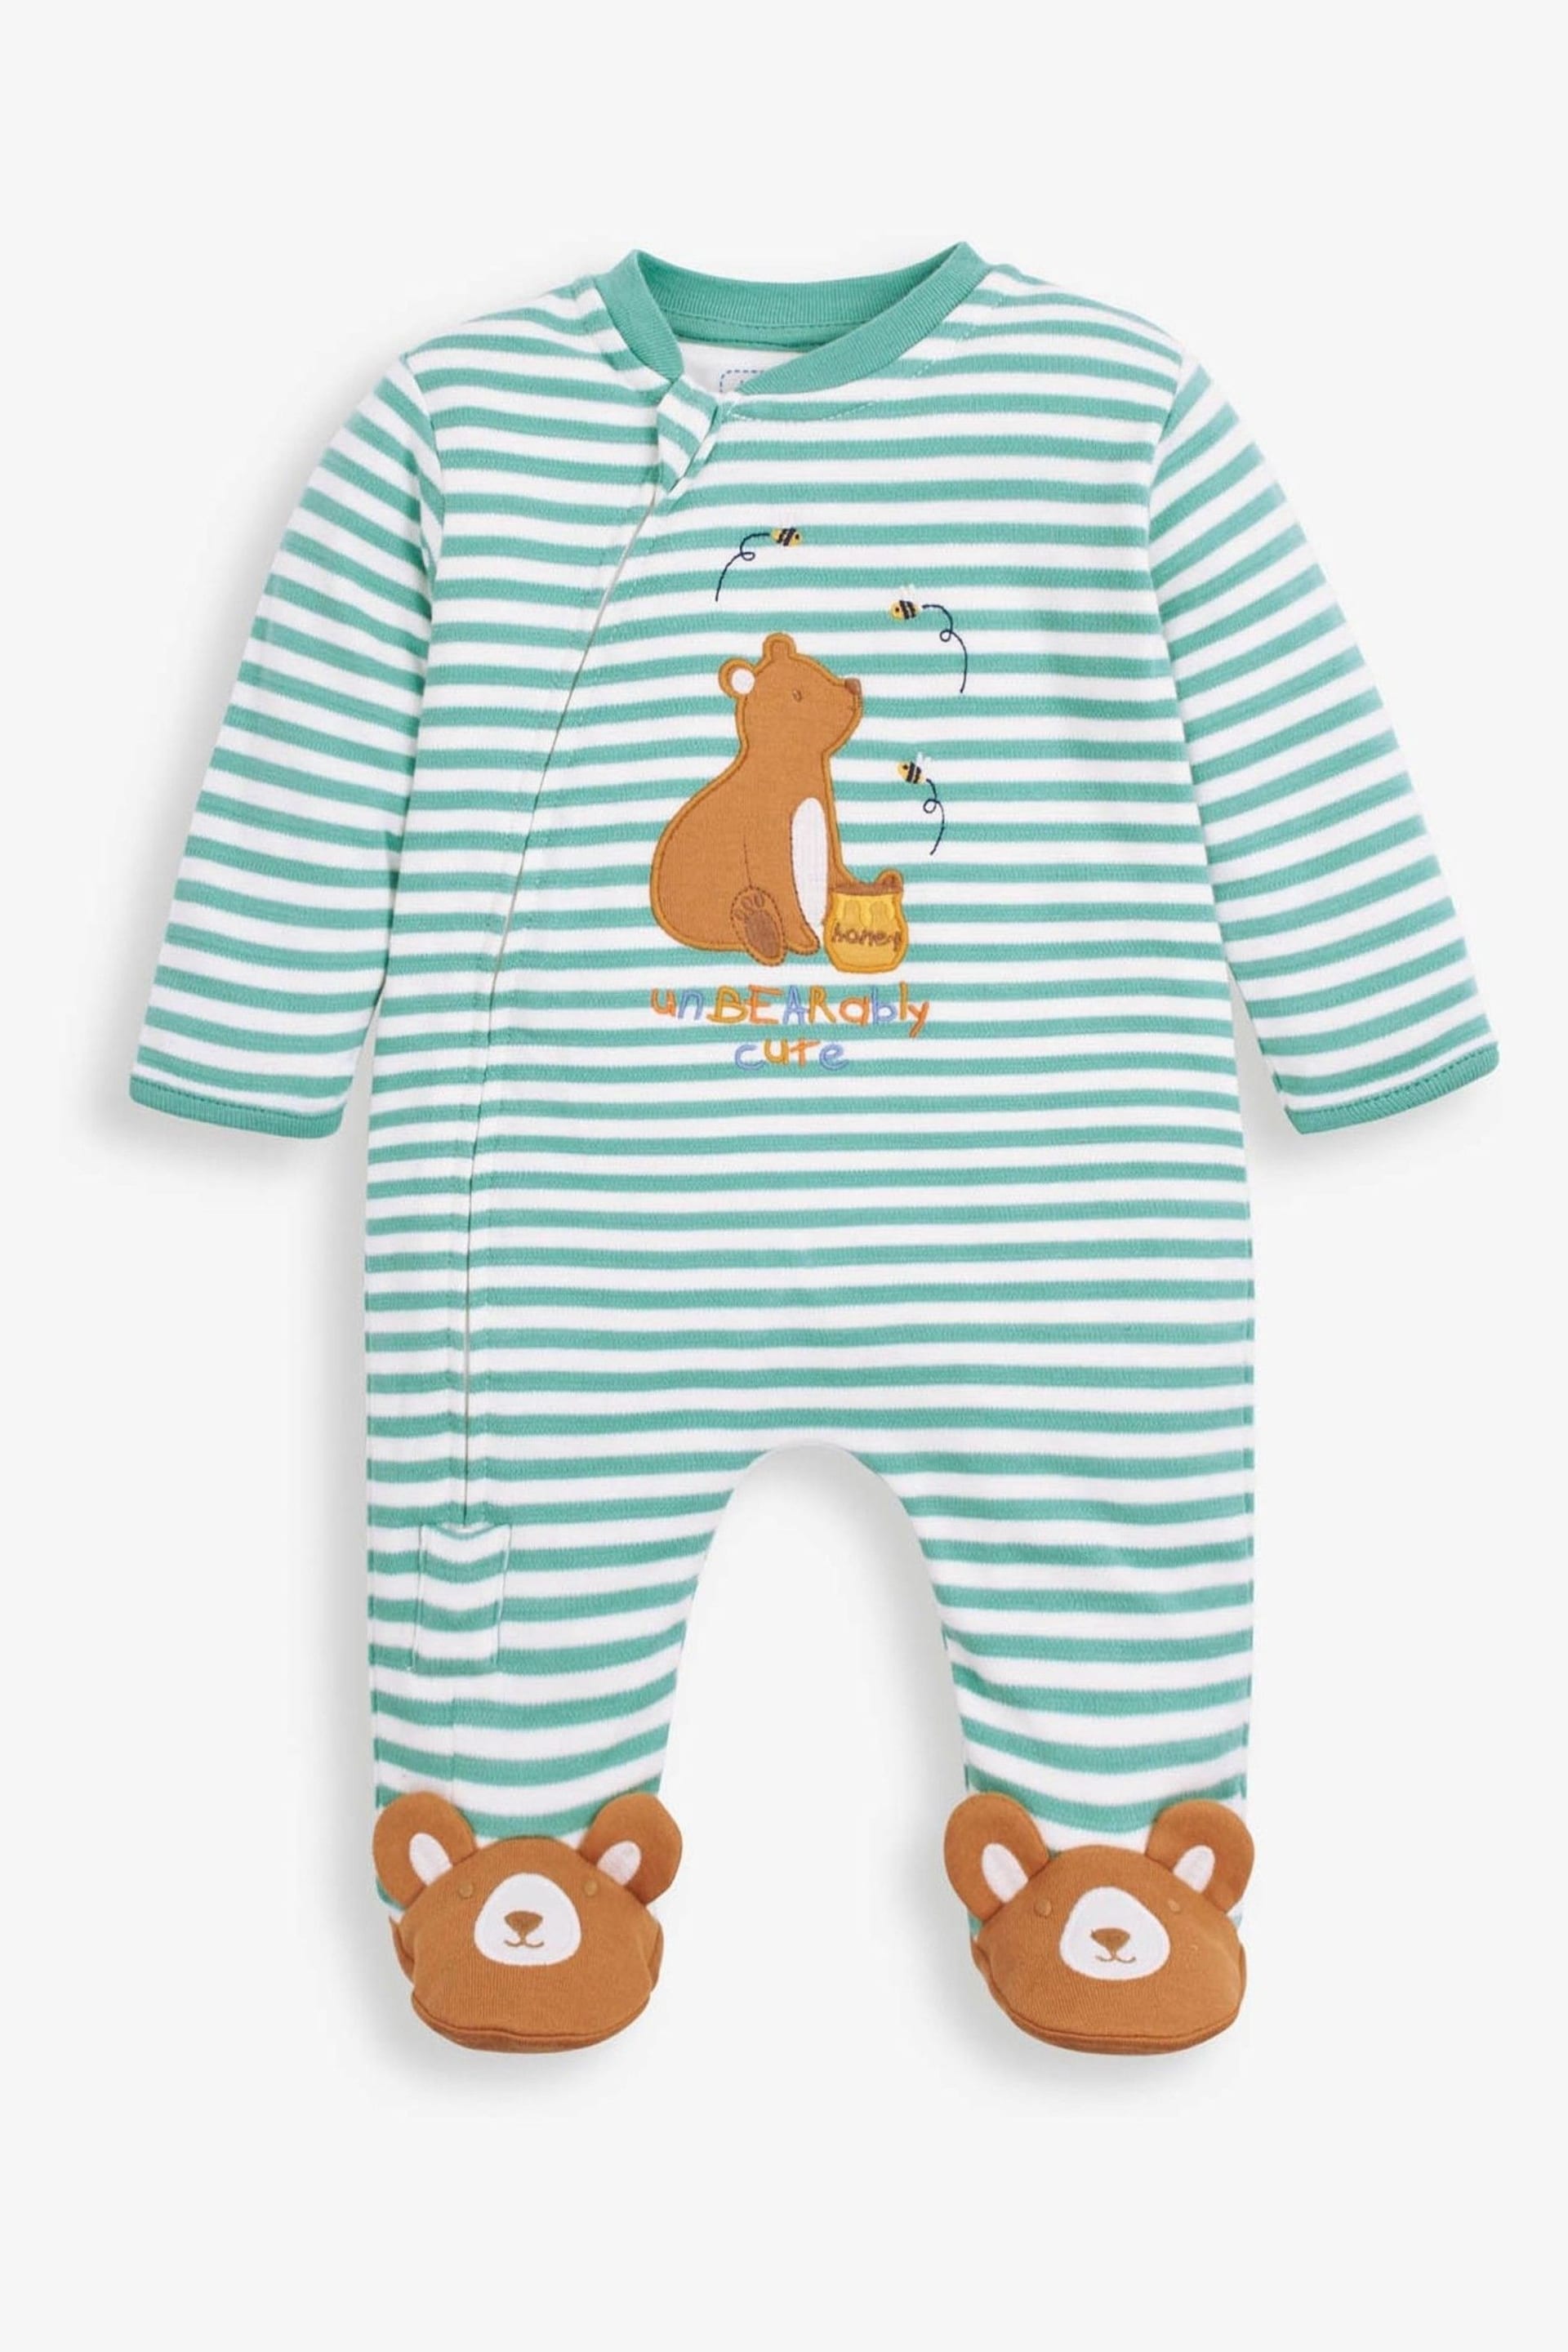 JoJo Maman Bébé Green Stripe Bear Appliqué Zip Cotton Baby Sleepsuit - Image 2 of 3